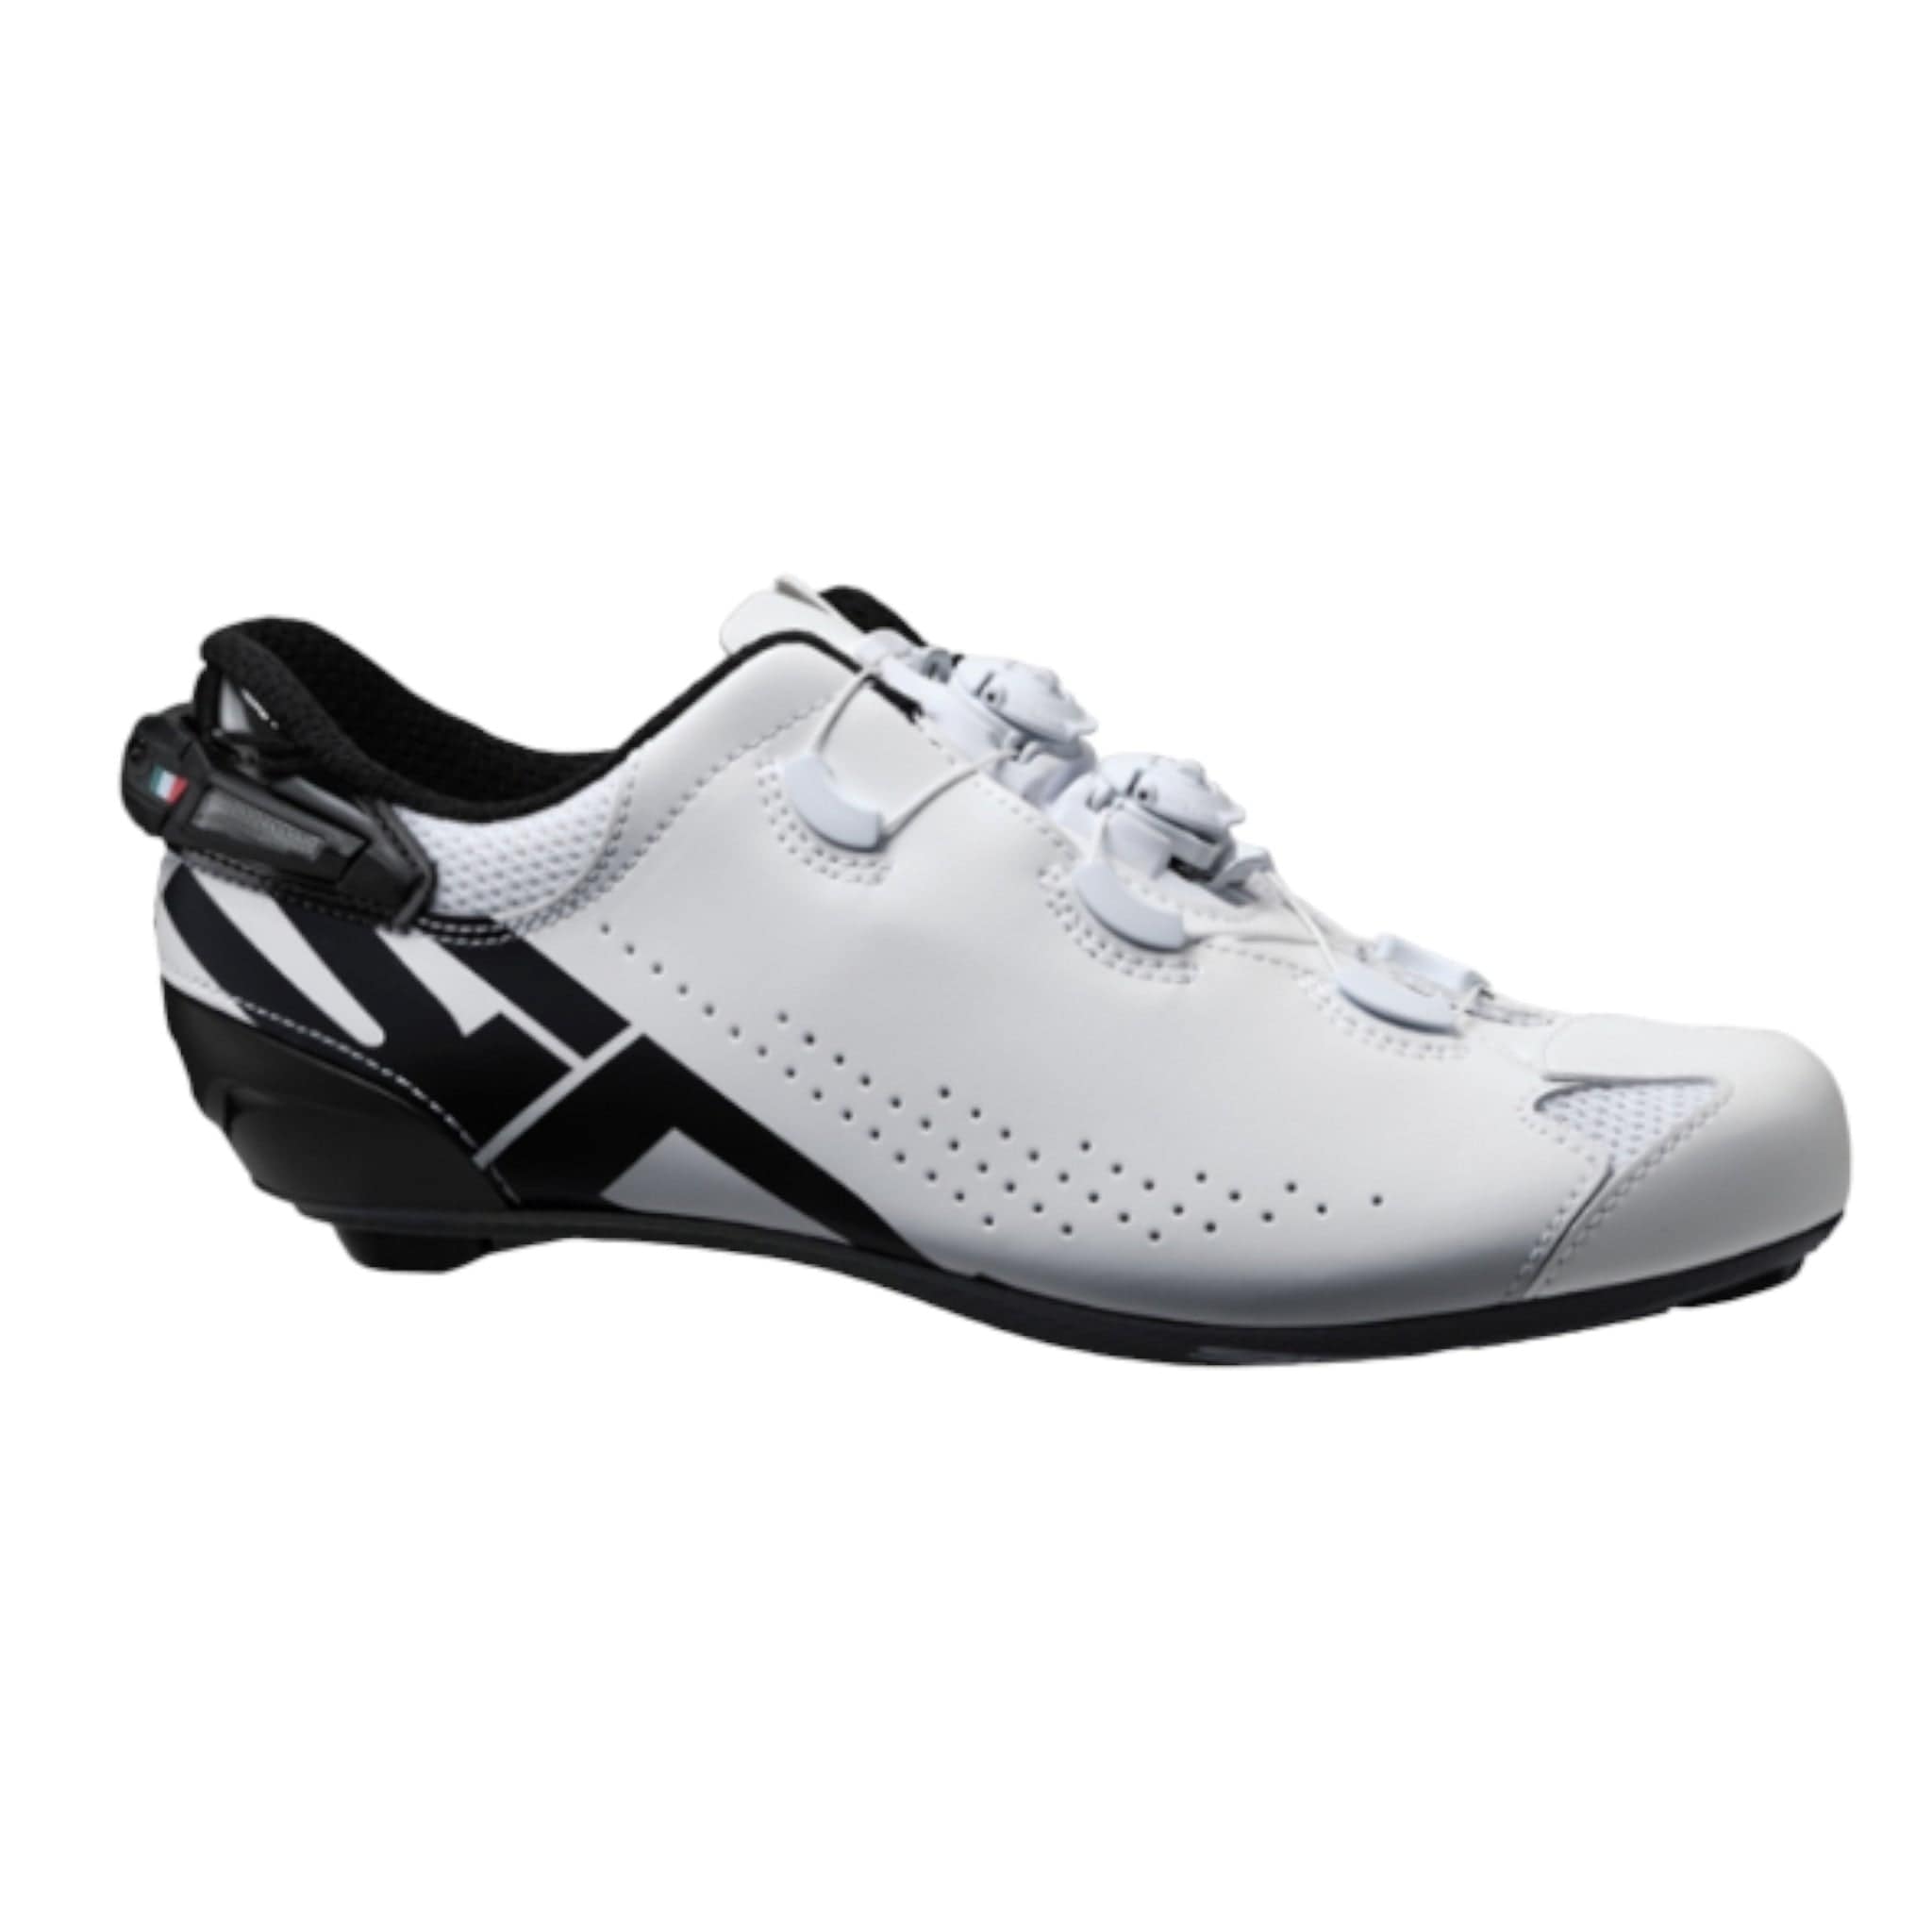 SiDI Shot 2S Shoes White/Black / 40 Apparel - Apparel Accessories - Shoes - Road